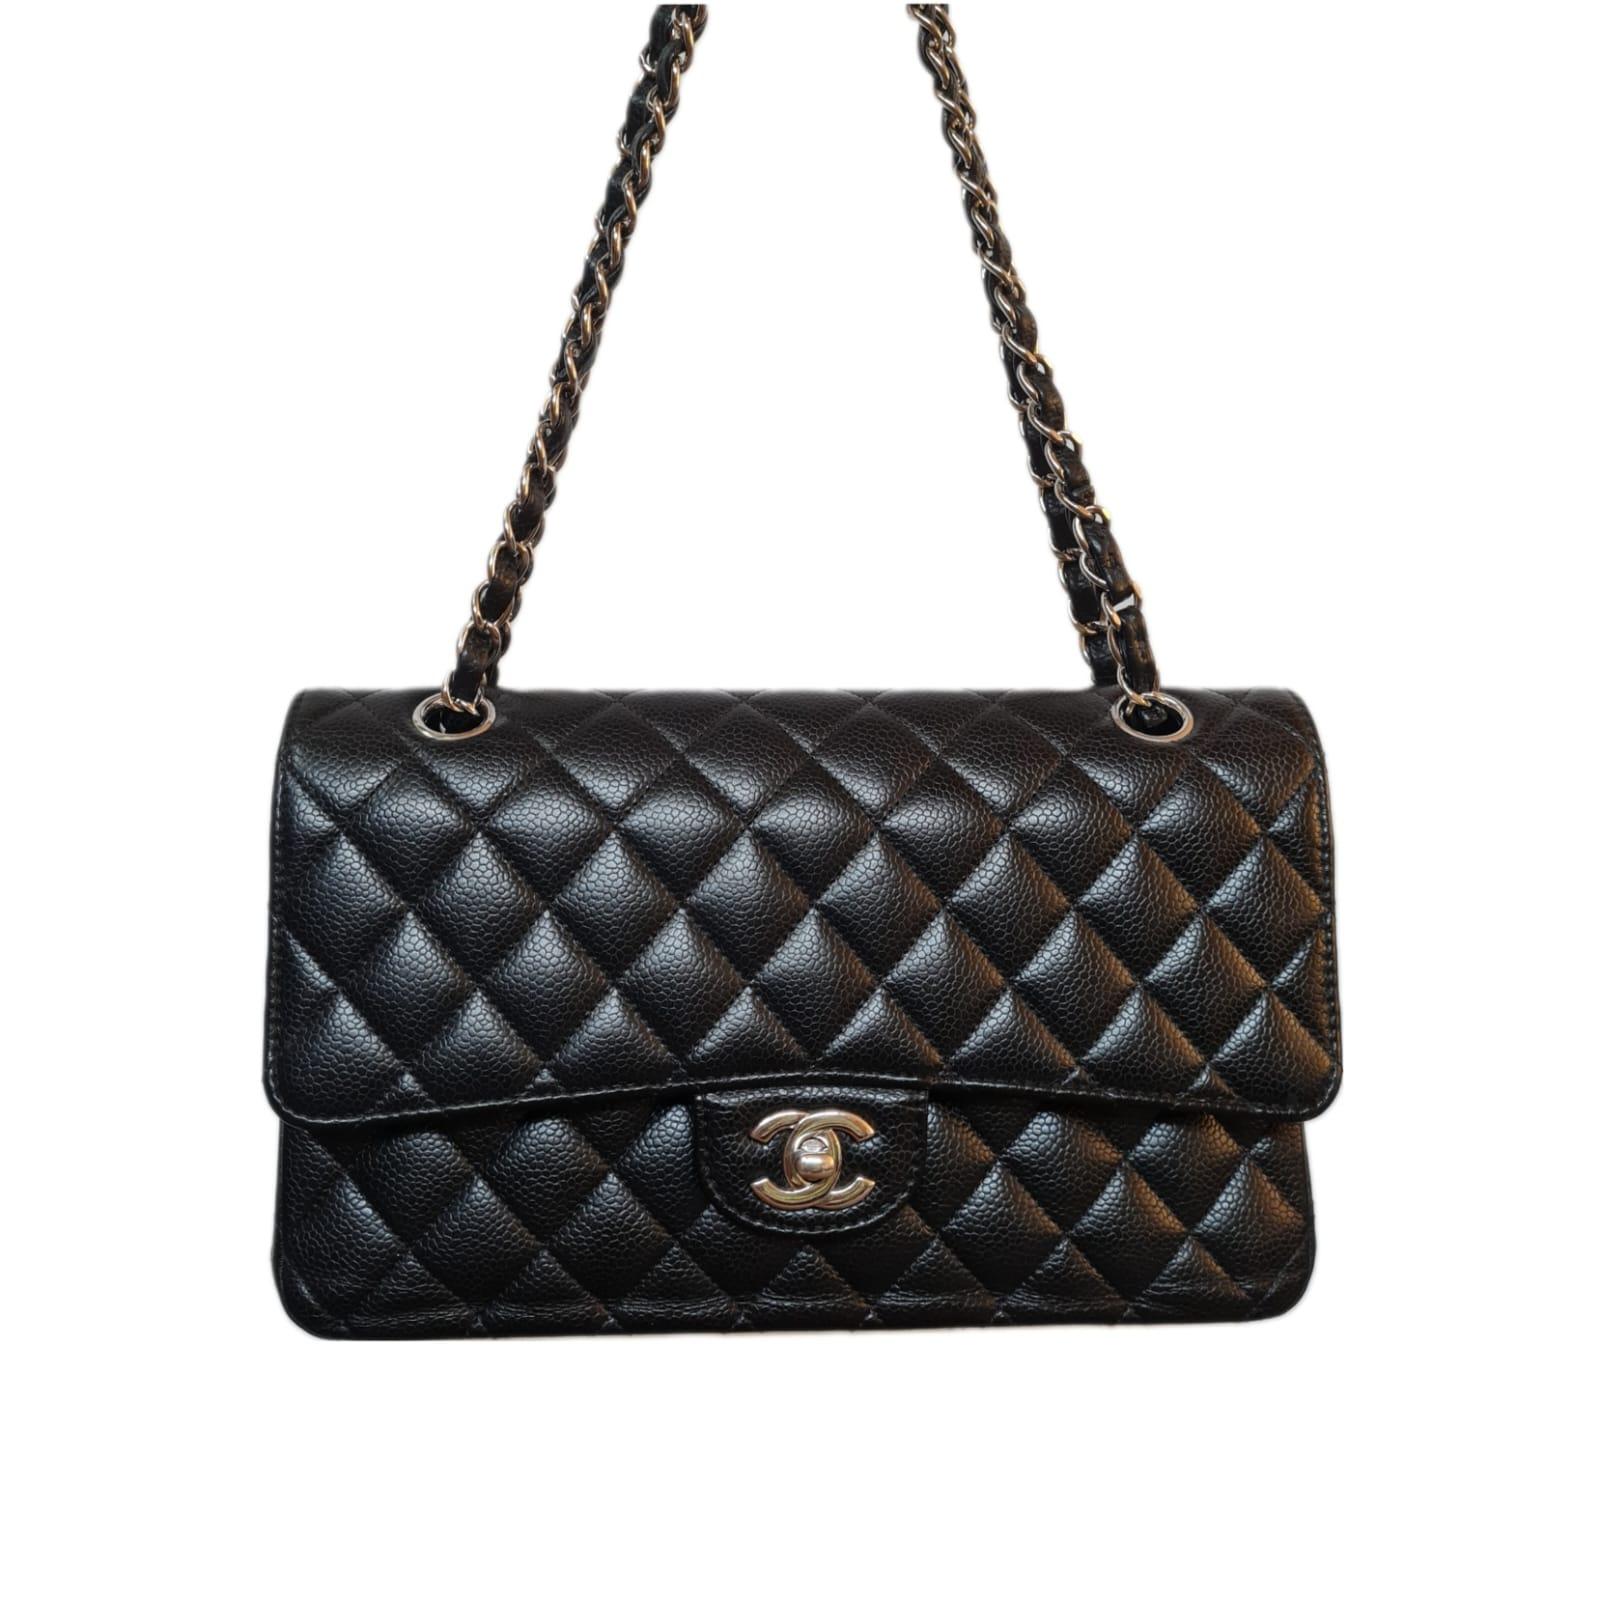 2021 Chanel Black Caviar Classic Double Flap Bag SHW 8